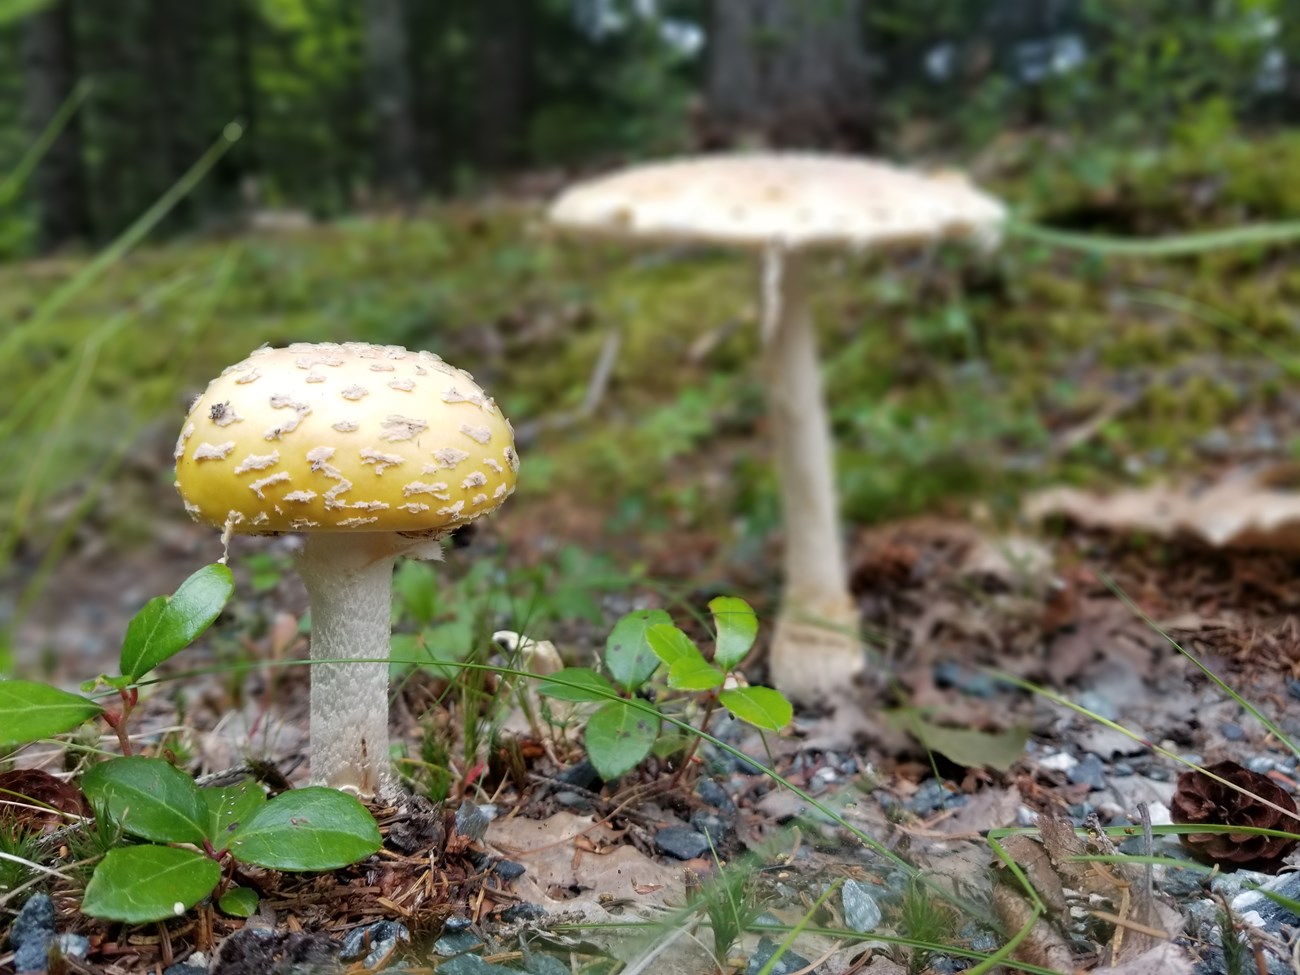 Two Amanita Muscaria mushrooms.